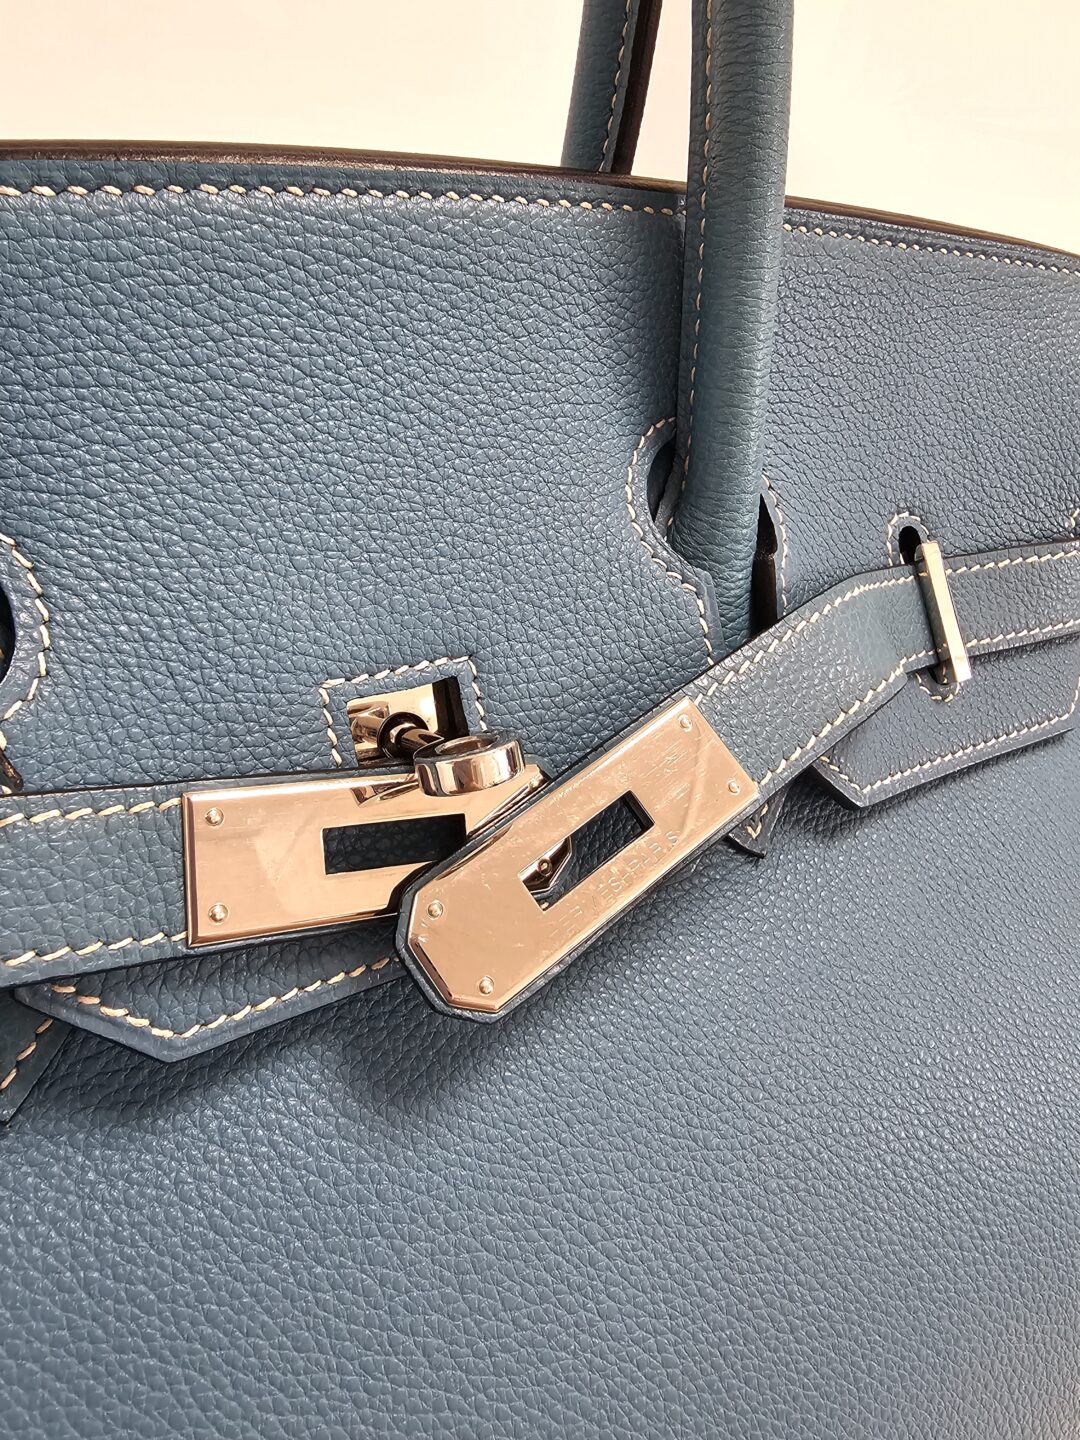 Hèrmes Bleu Jean Birkin 35cm of Togo Leather with Palladium